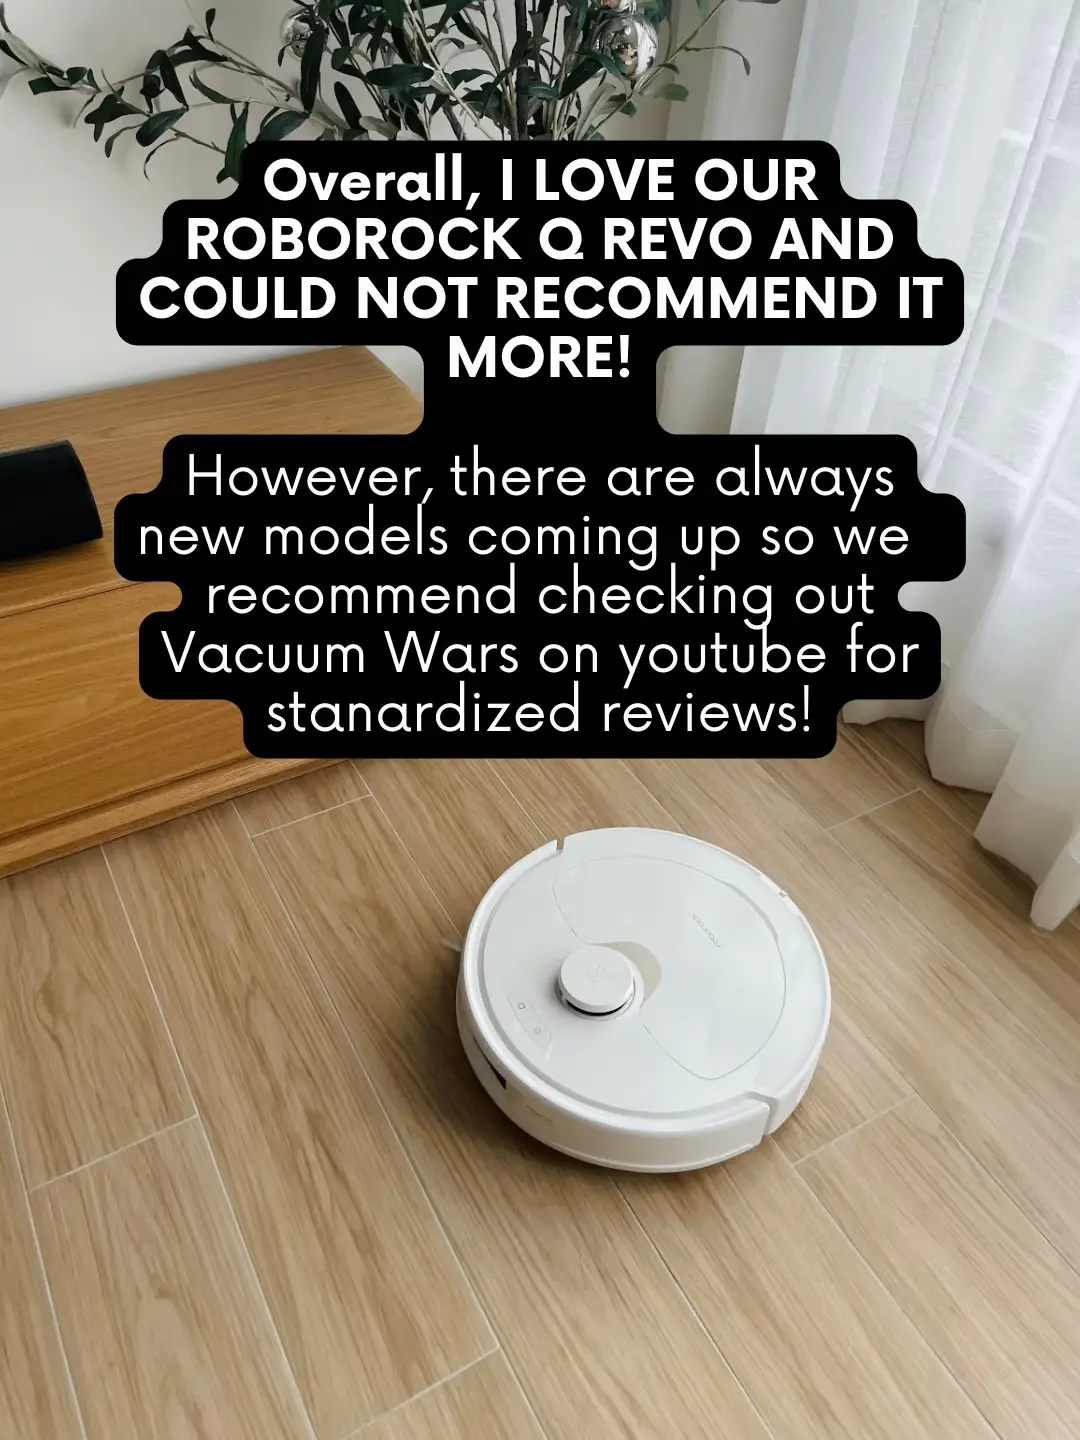 Review: Roborock Q Revo Do-it-all Value Robot Vacuum Mop « Tech